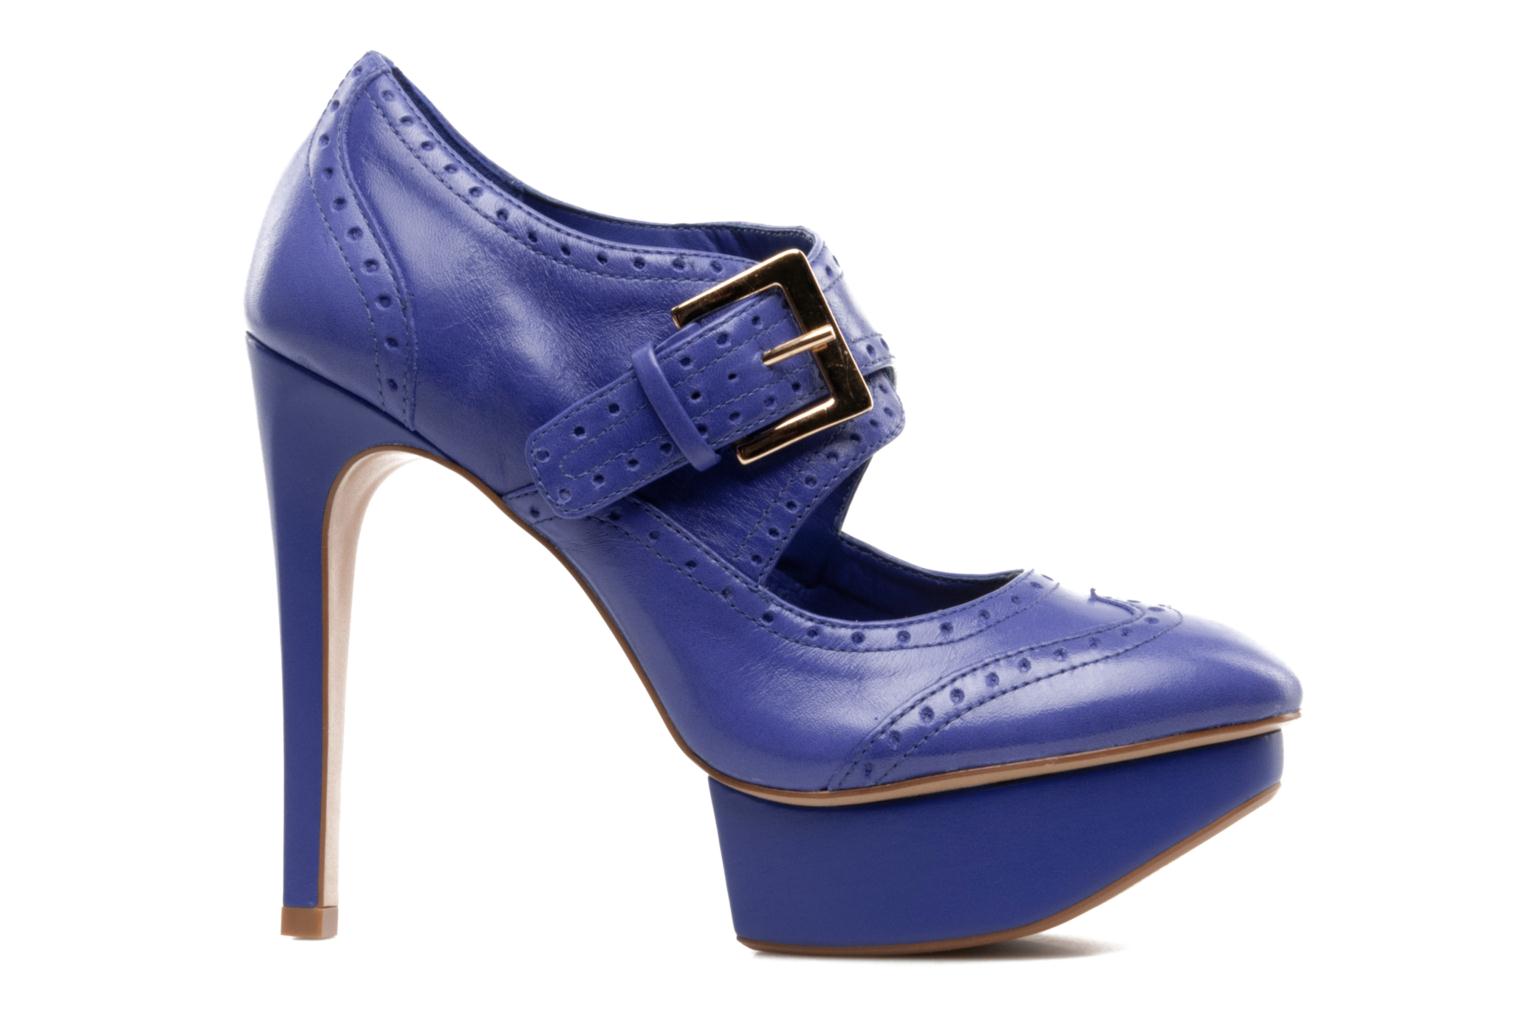 Via Uno Uvina High heels in Blue at Sarenza.co.uk (105628)